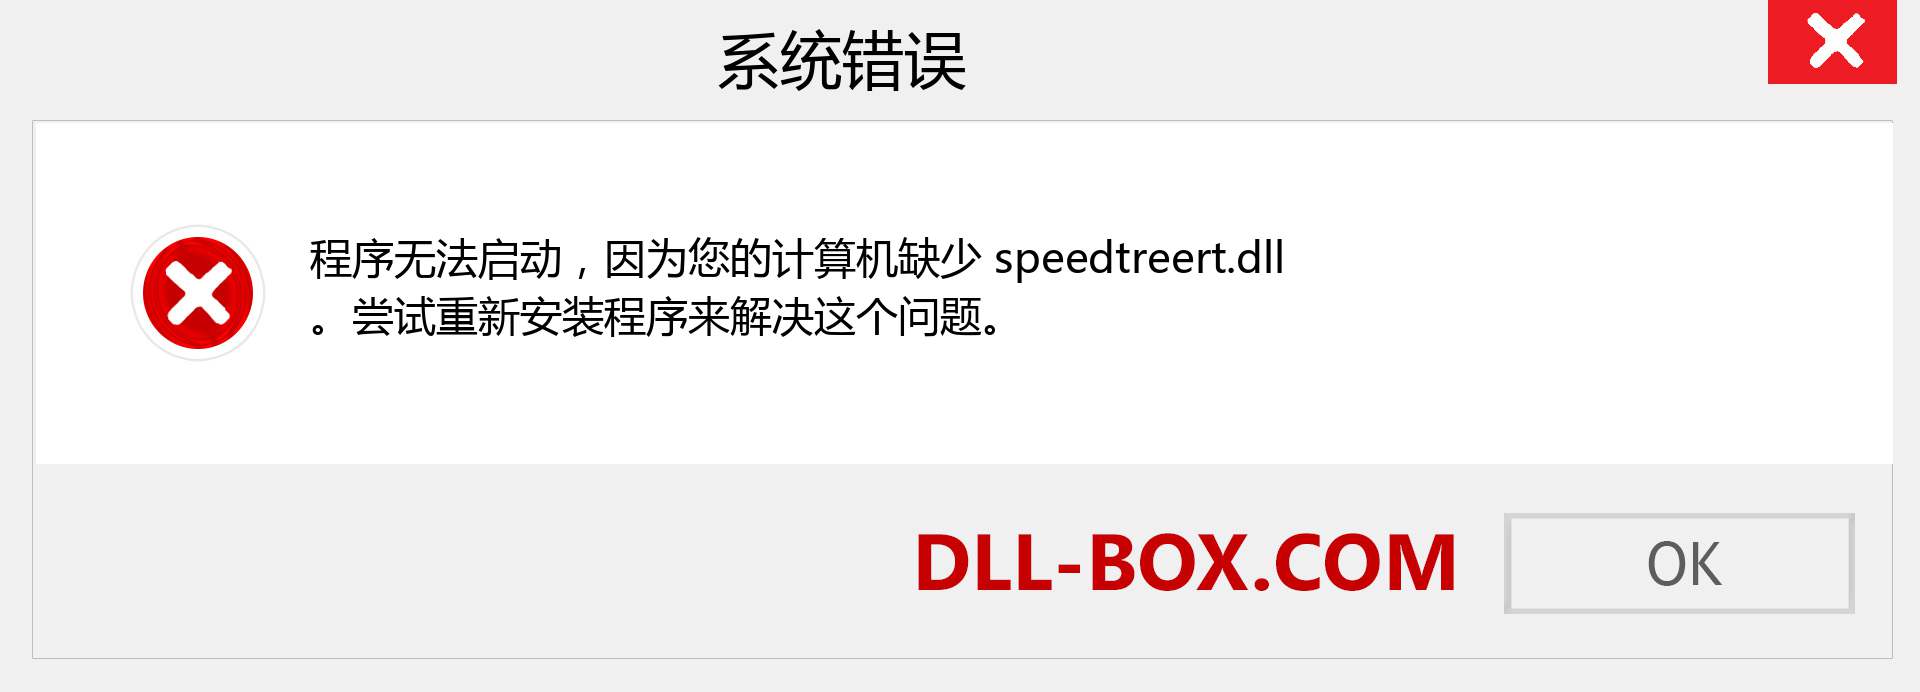 speedtreert.dll 文件丢失？。 适用于 Windows 7、8、10 的下载 - 修复 Windows、照片、图像上的 speedtreert dll 丢失错误